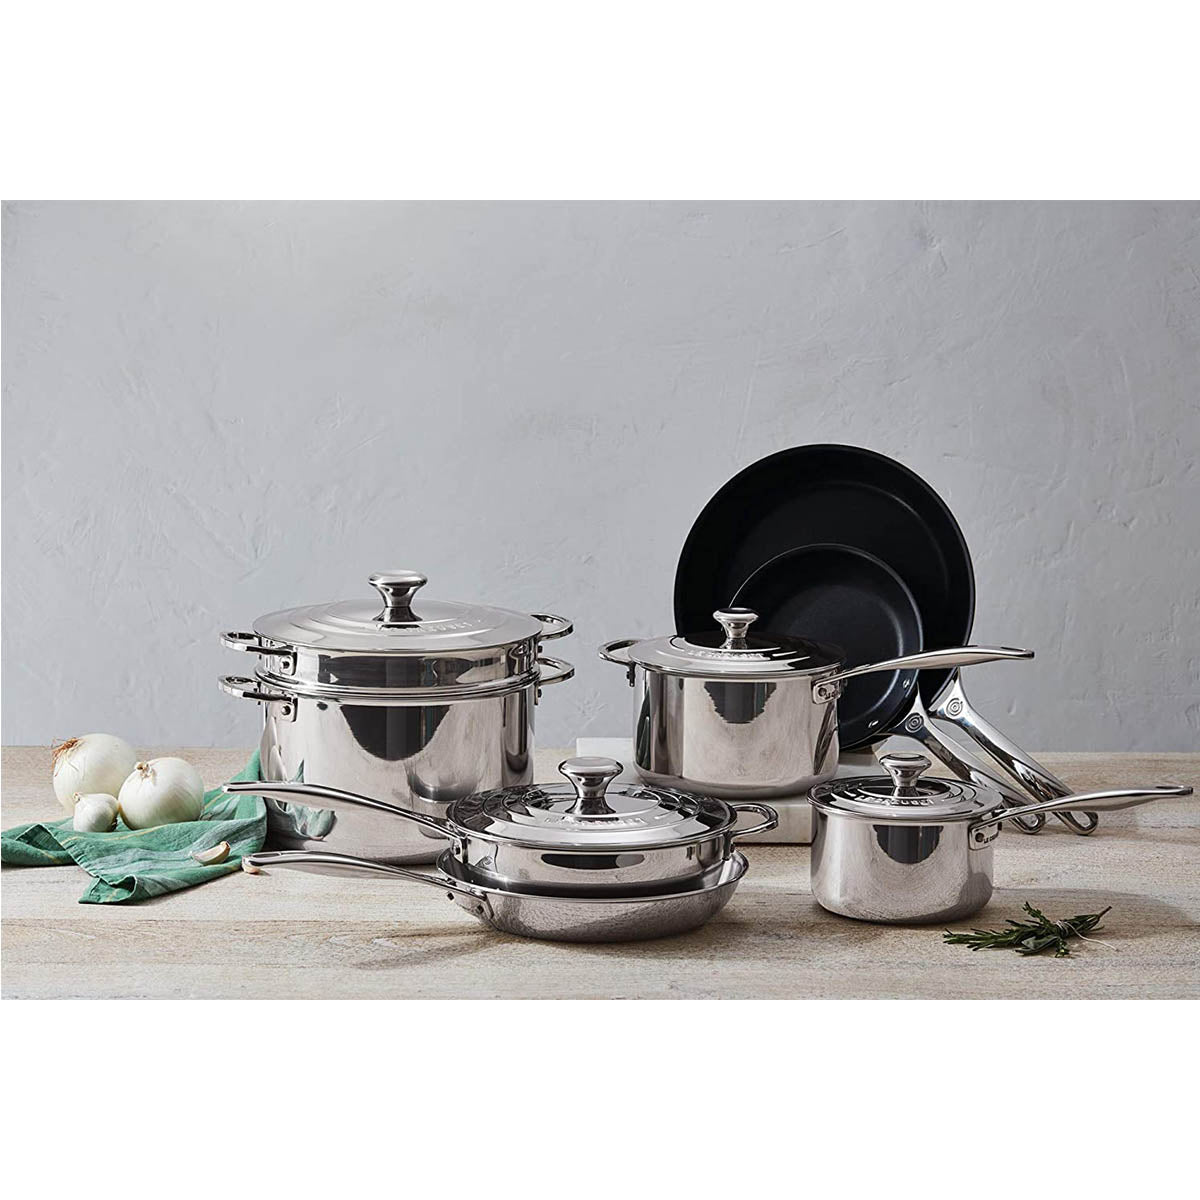 Farberware Stainless Steel Cookware 12-Piece Set